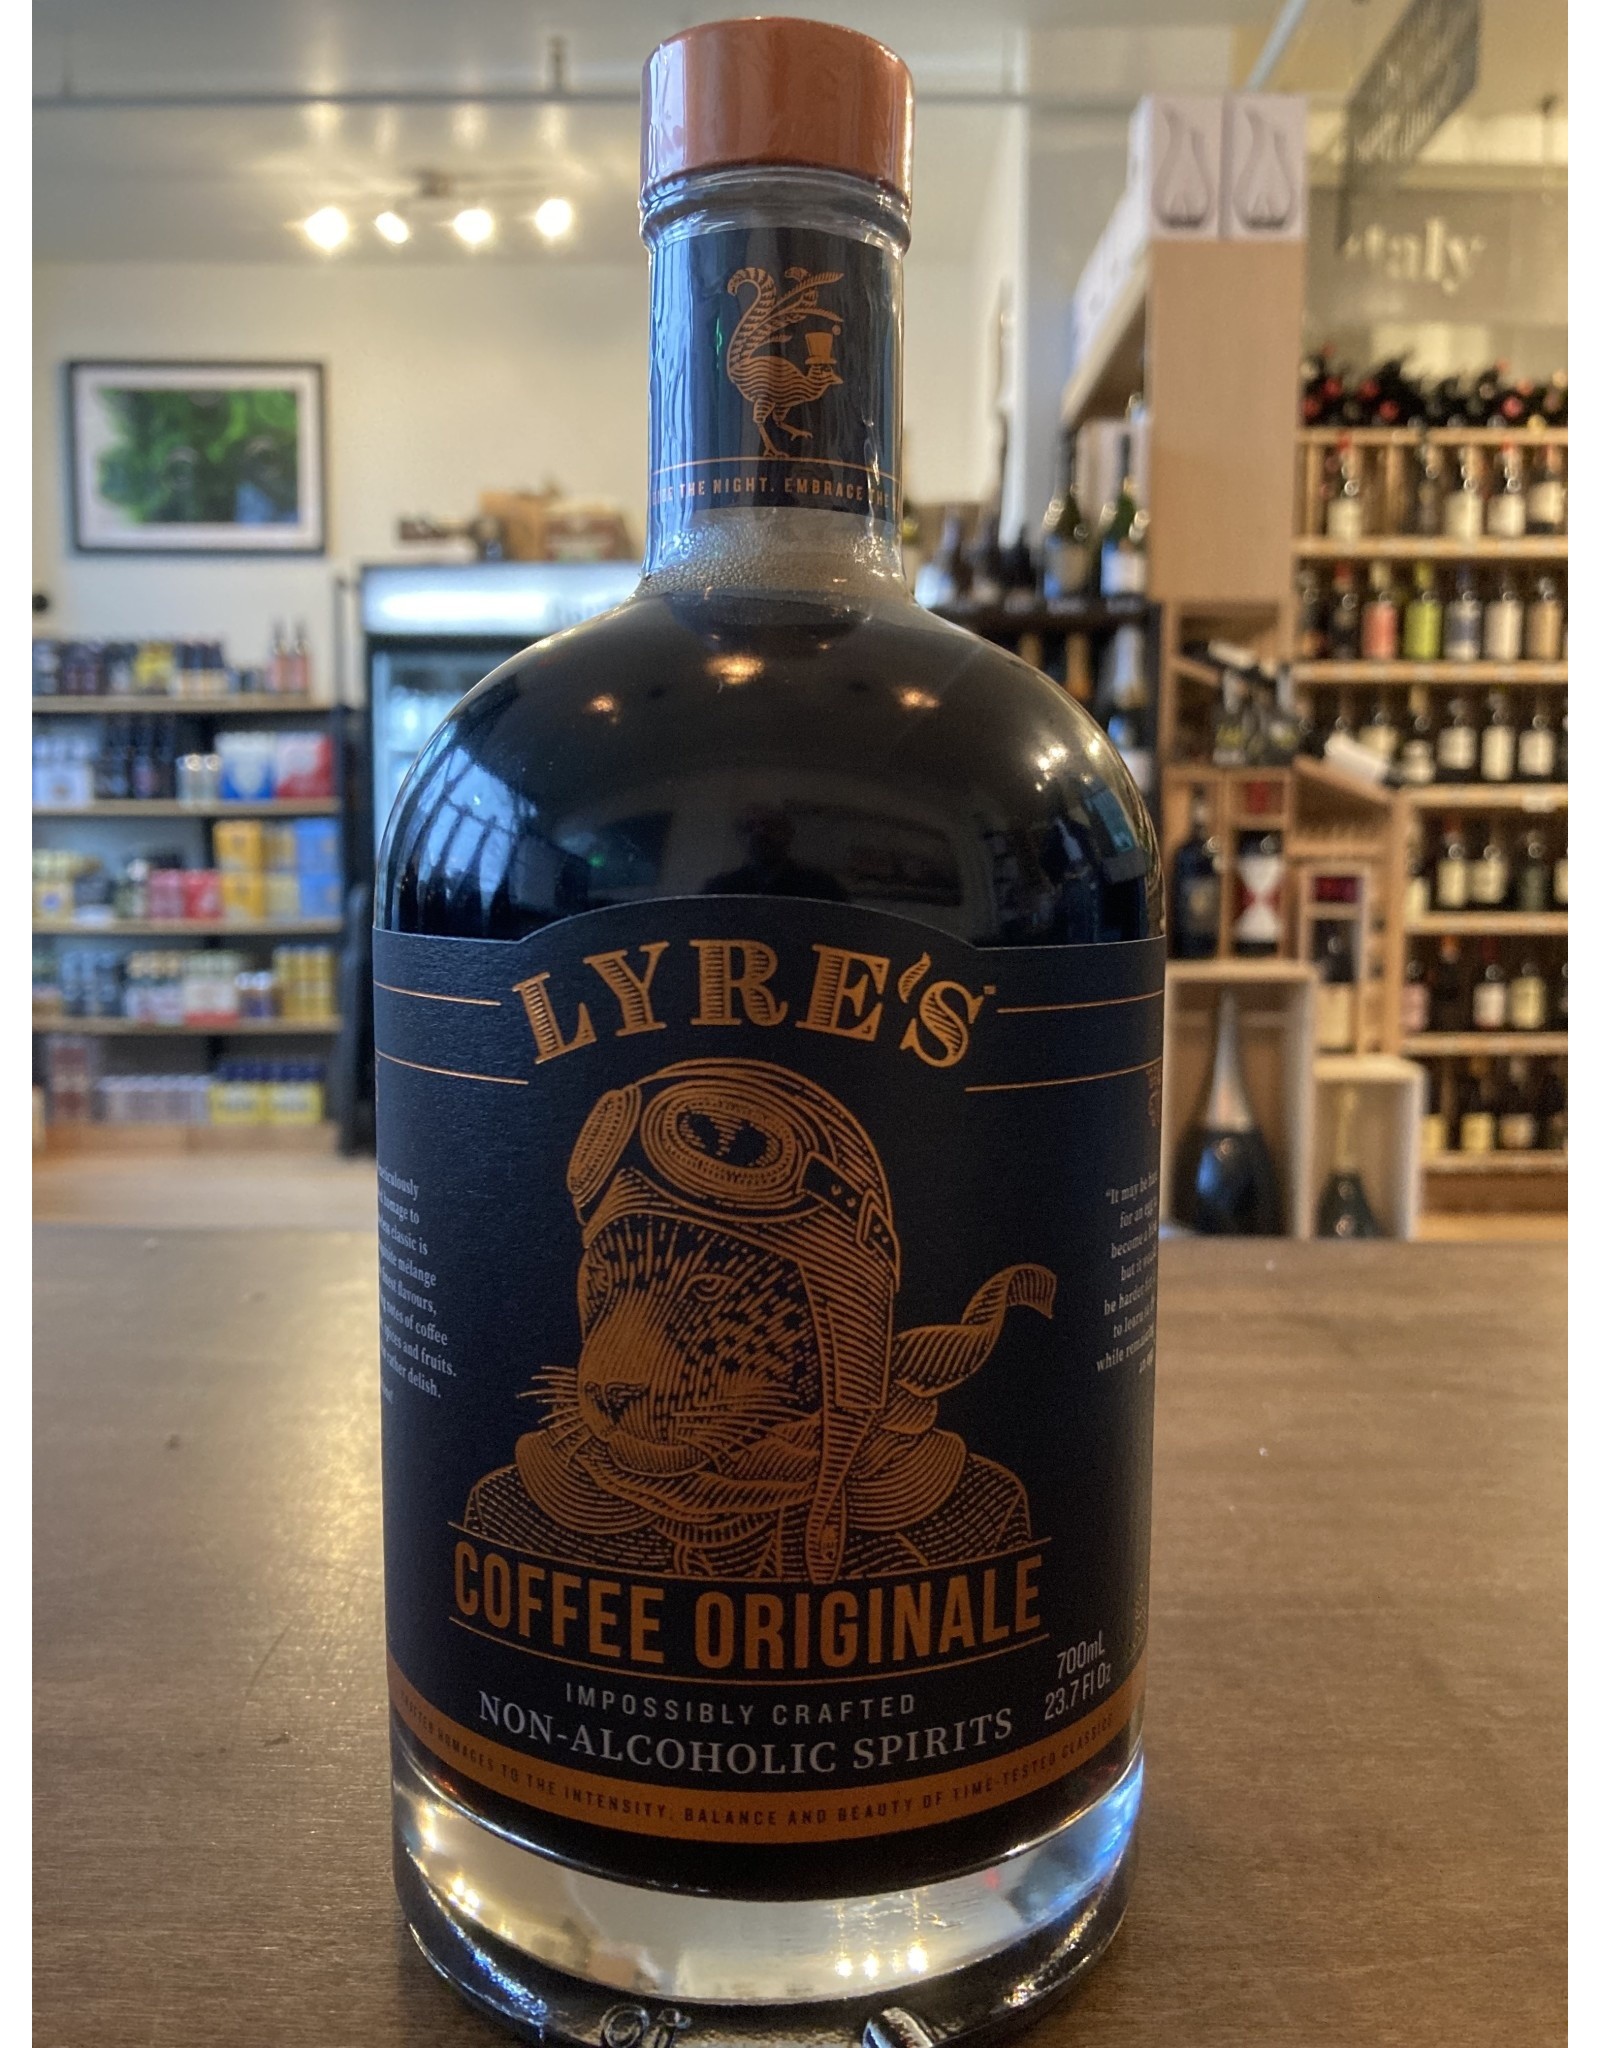 Lyre's "Coffee Originale" Non-Alcoholic Coffee Liqueur